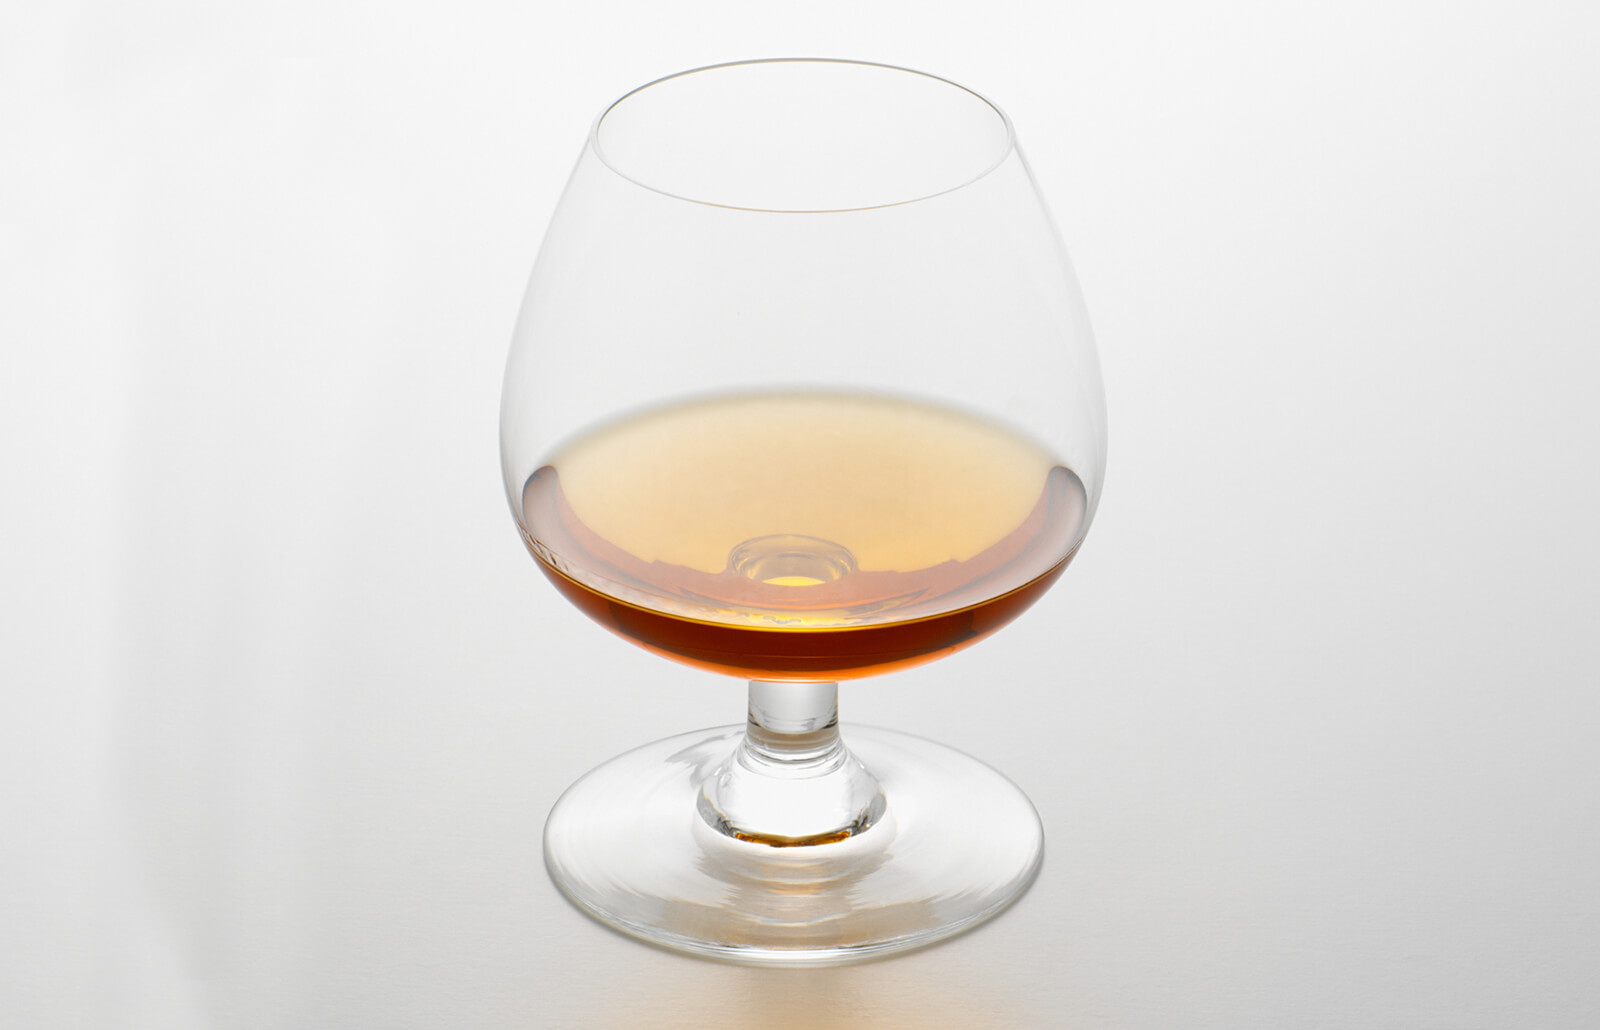 261161-1600x1030-how-drink-brandy-right-way.jpg